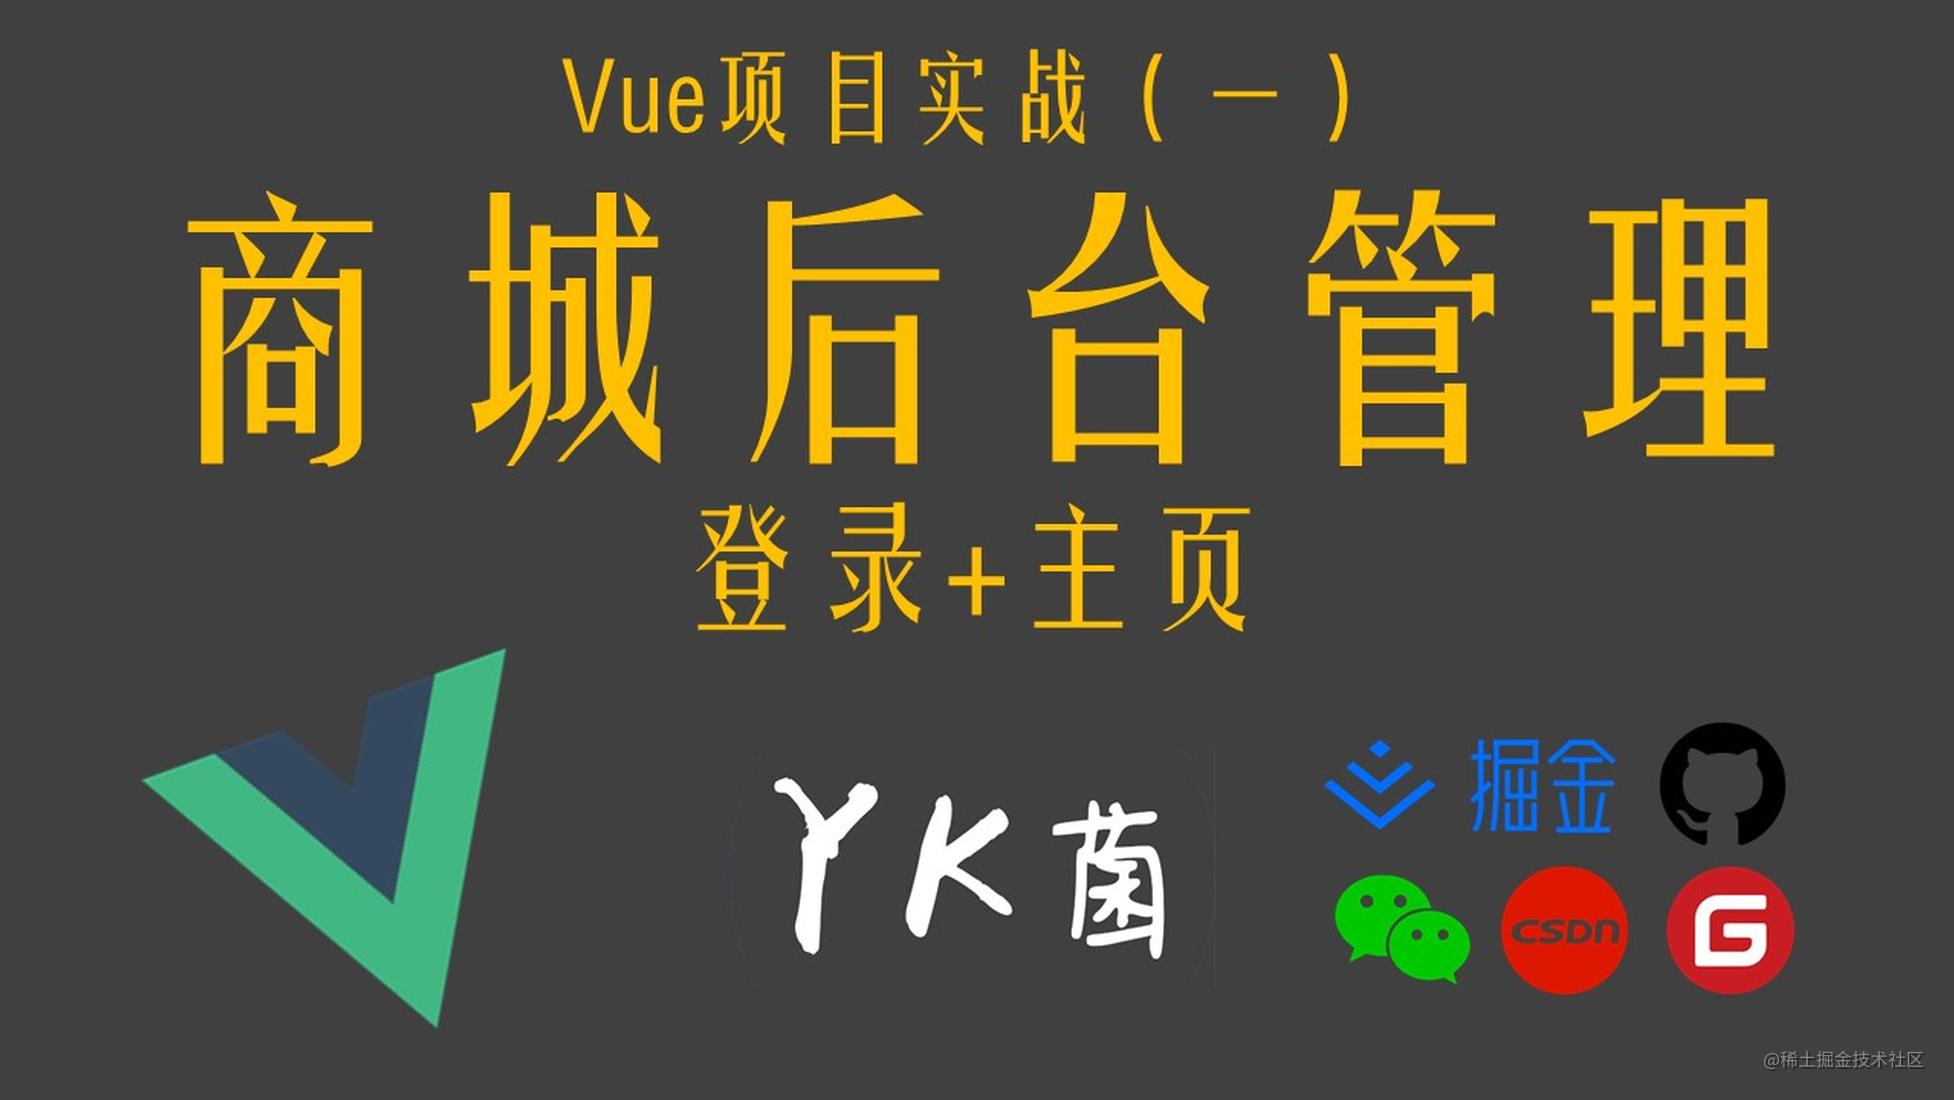 【Vue】实战项目：电商后台管理系统（一）前后端搭建 - 登录界面 - 主页界面